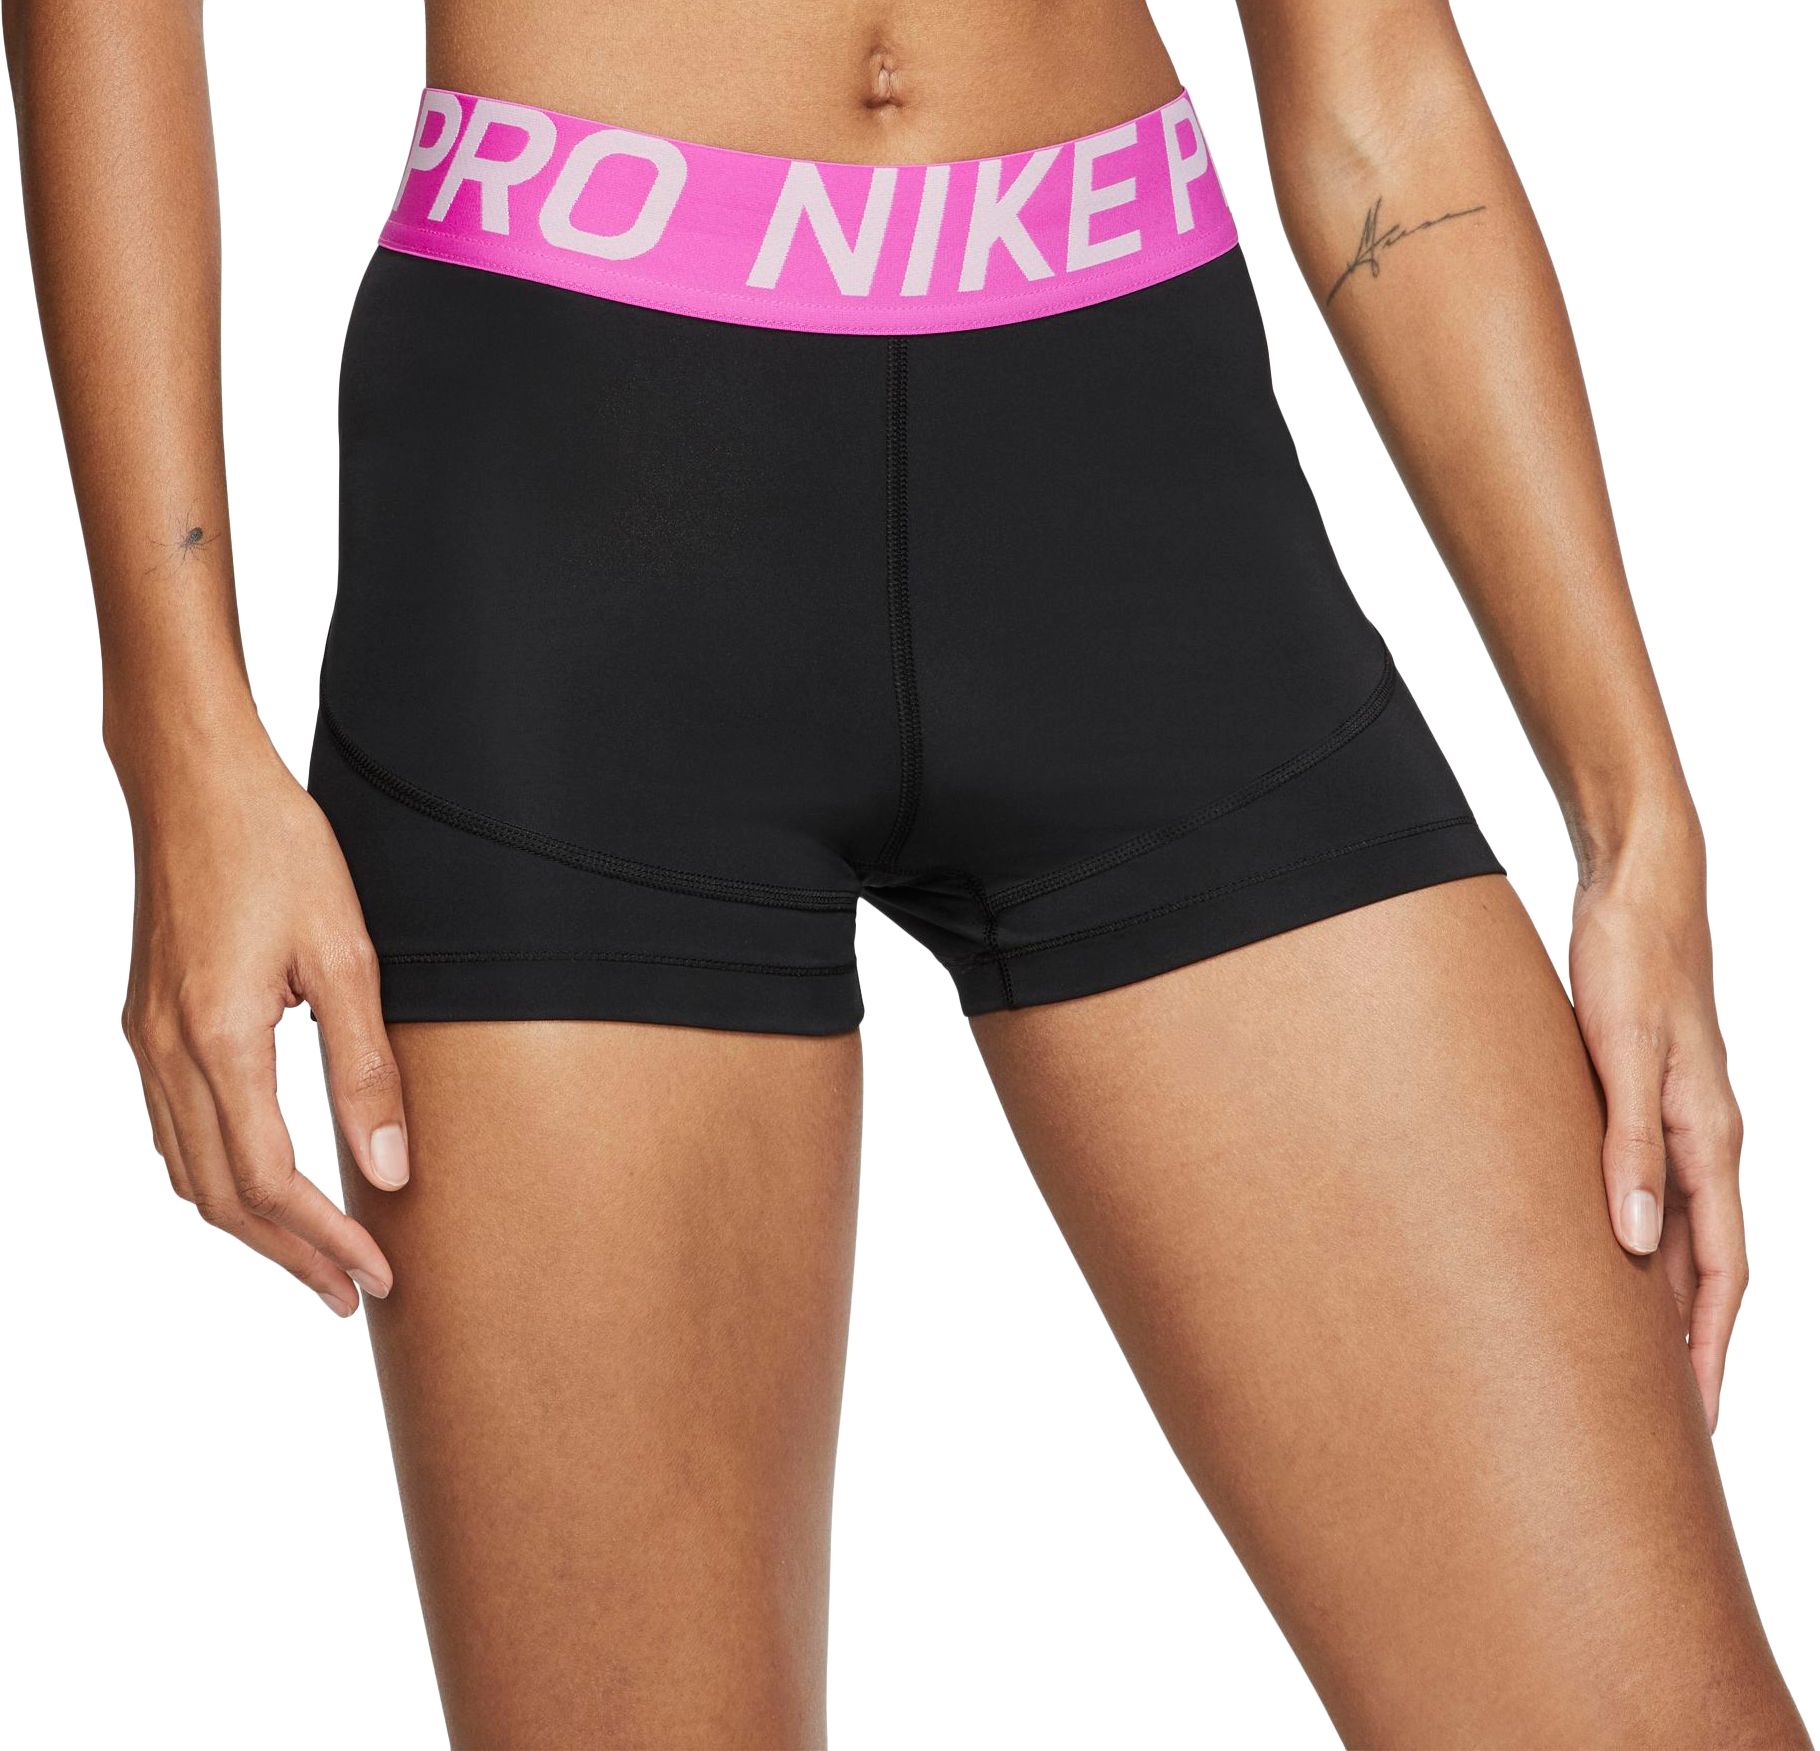 pink nike spandex shorts